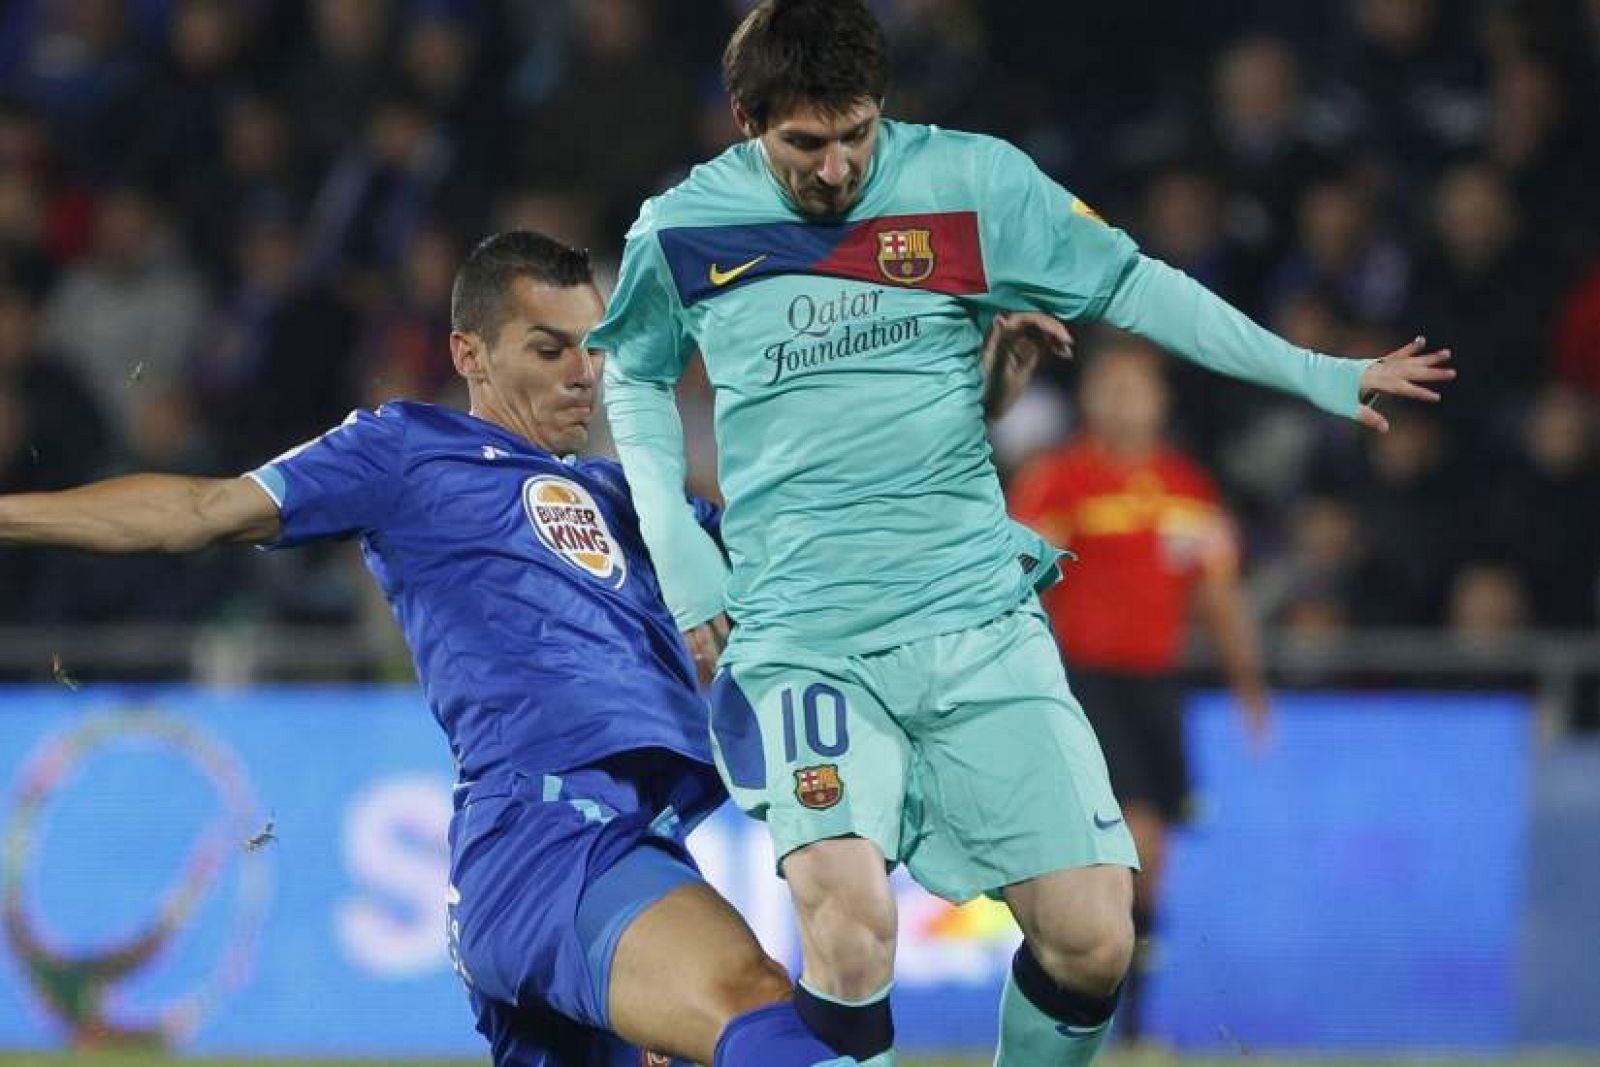 El jugador del Getafe, Casquero, trata de robar el balón al azulgrana Messi en el último encuentro que les enfrentó en la Liga.